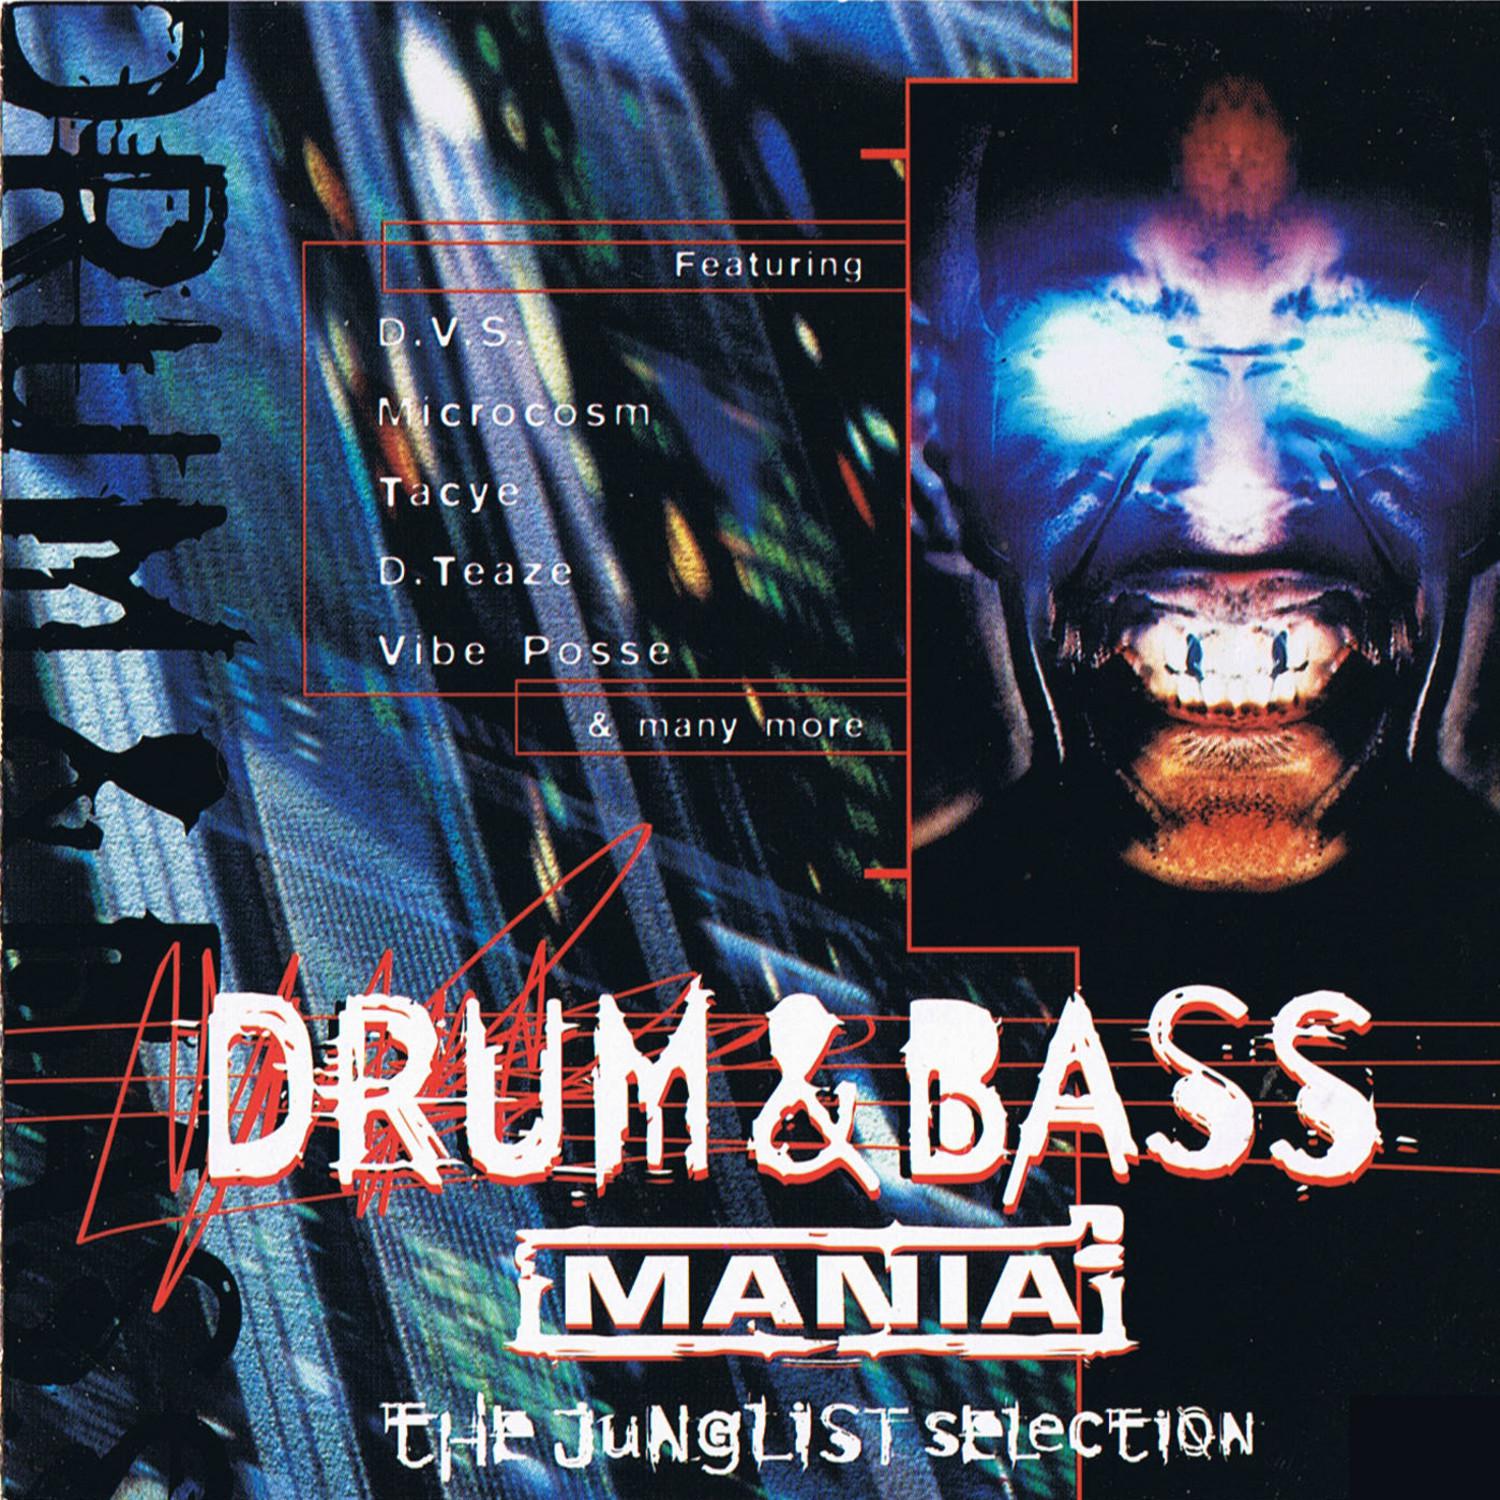 Drum & Bass Mania